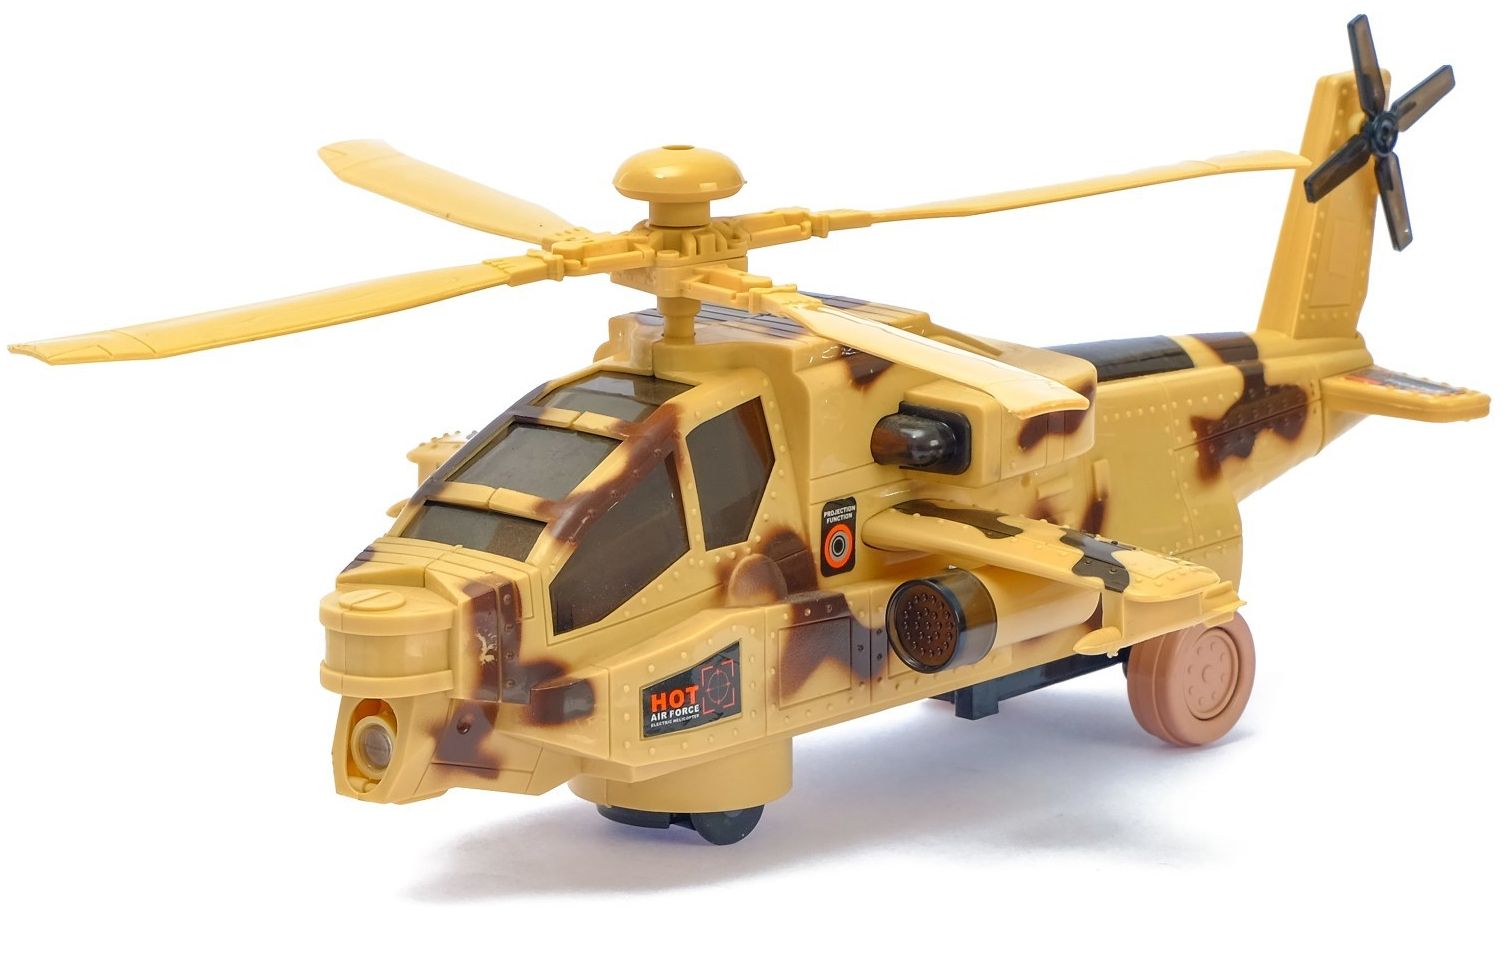 Игрушка вертолет апач война в Сирии